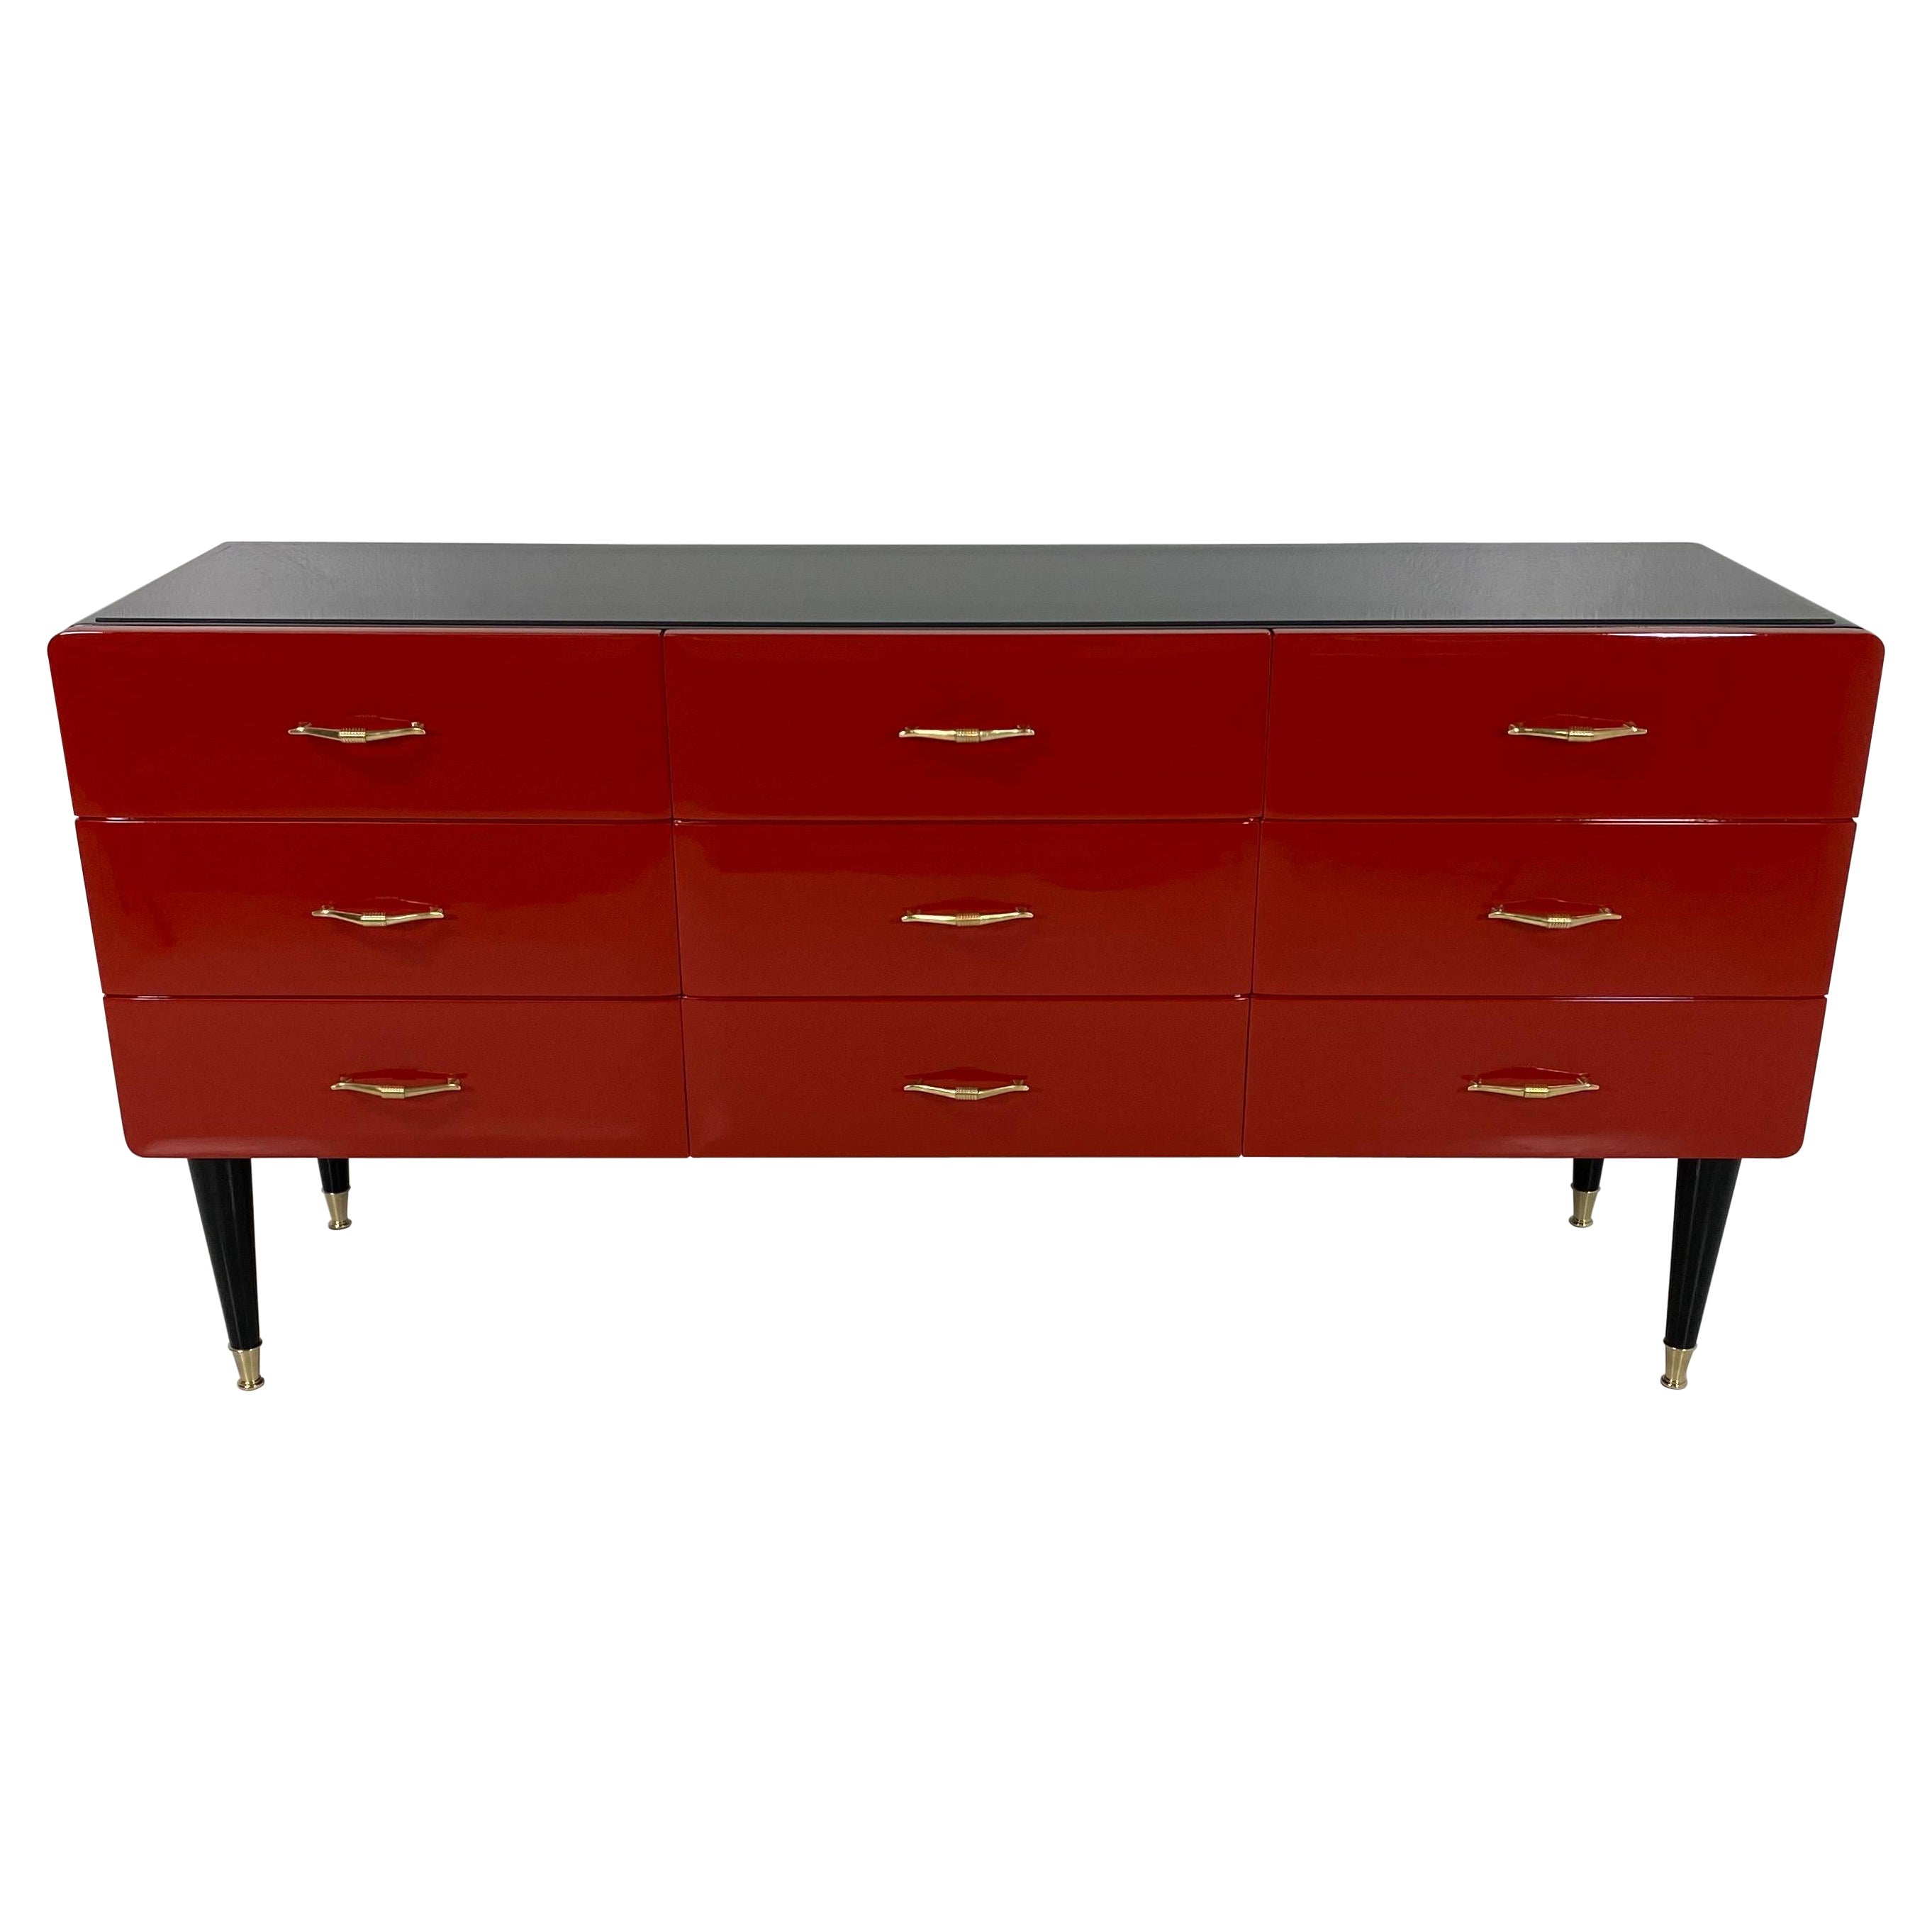 Italian Art Deco Red and Black Lacquer Dresser Attr. to Gio Ponti, 1940s